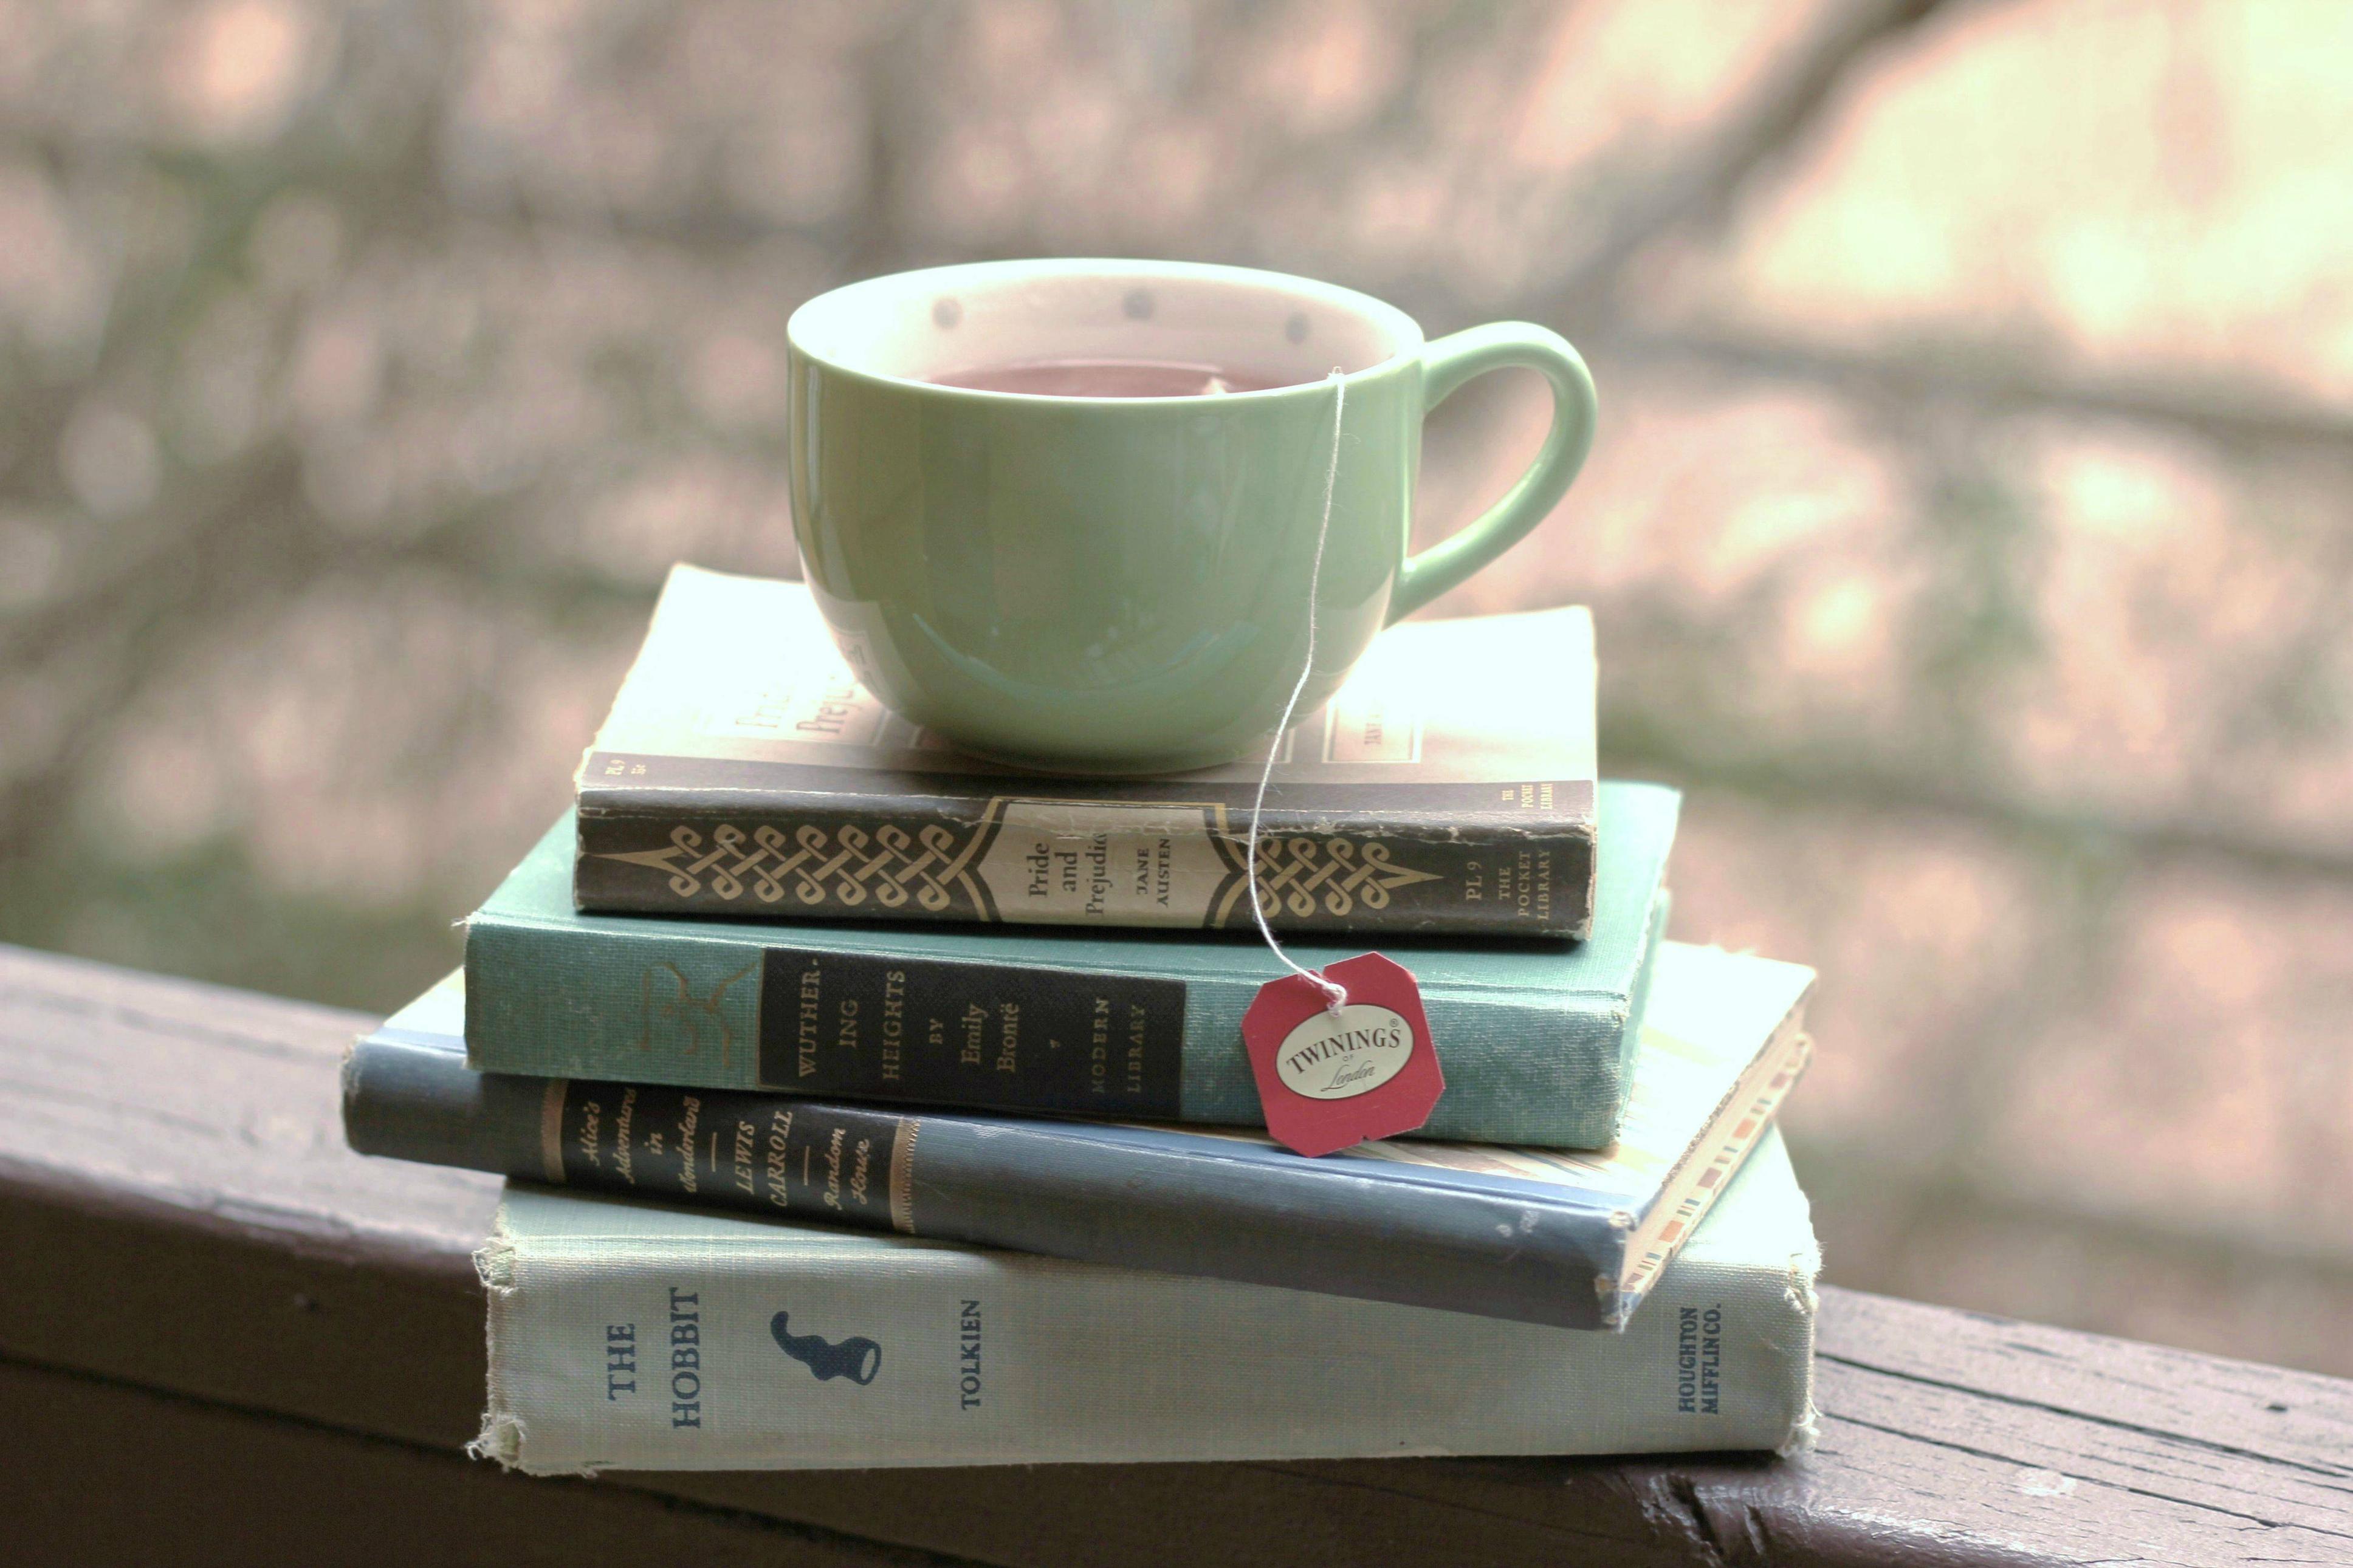 Tea and a book club